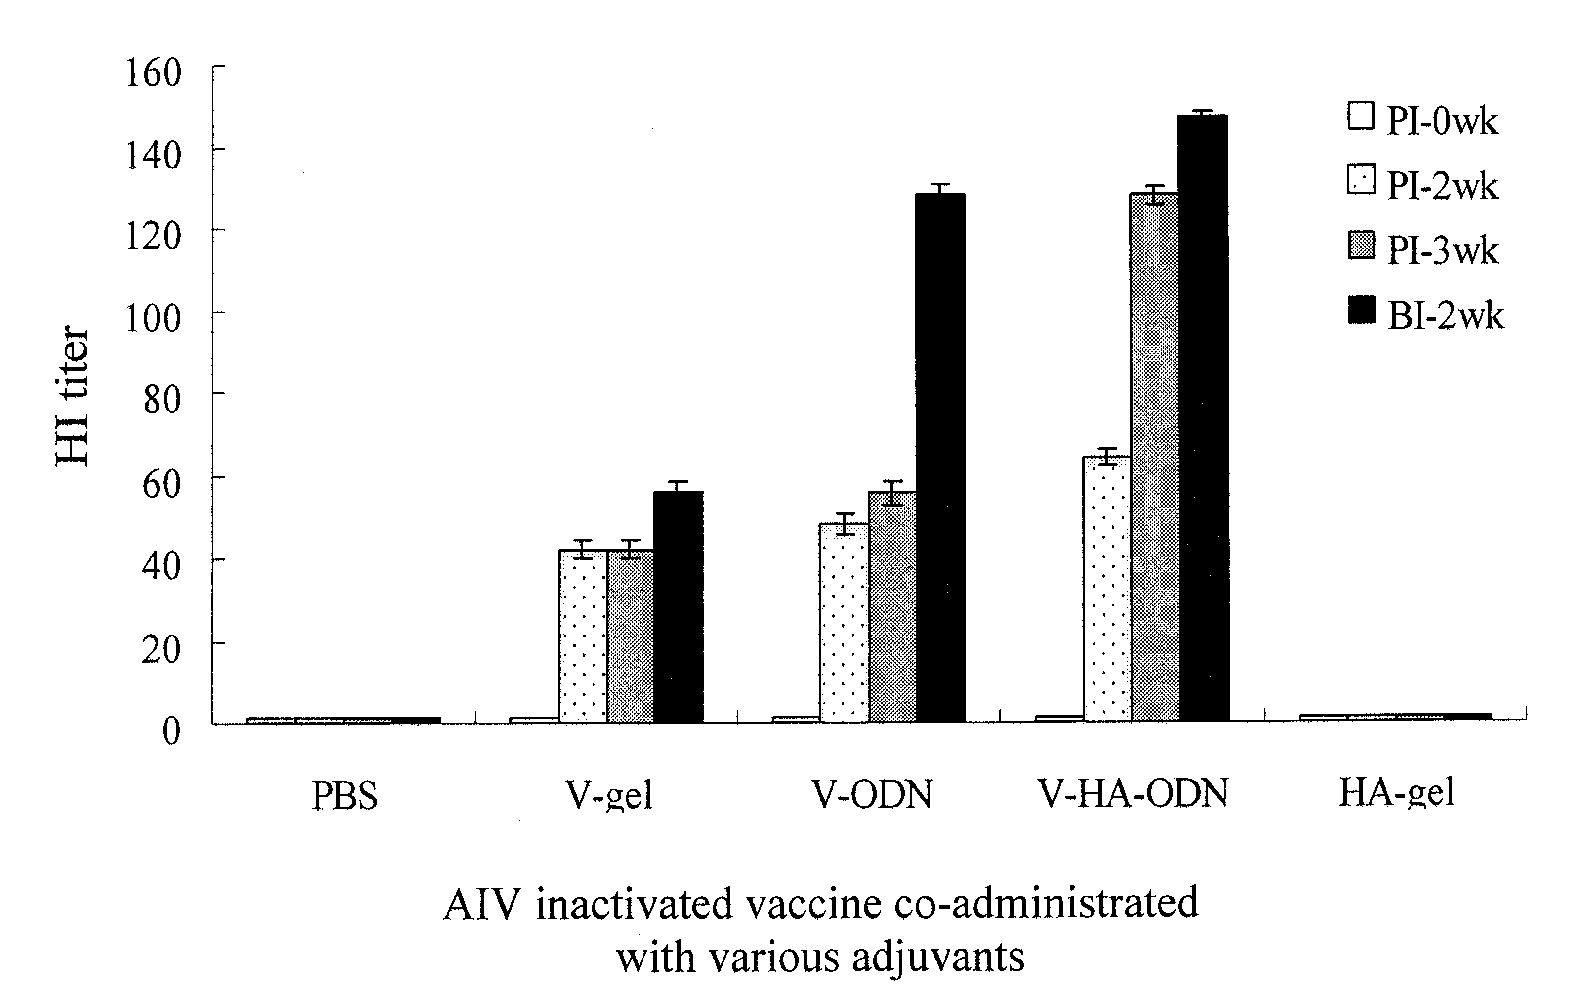 CpG DNA Adjuvant in Avian Vaccines